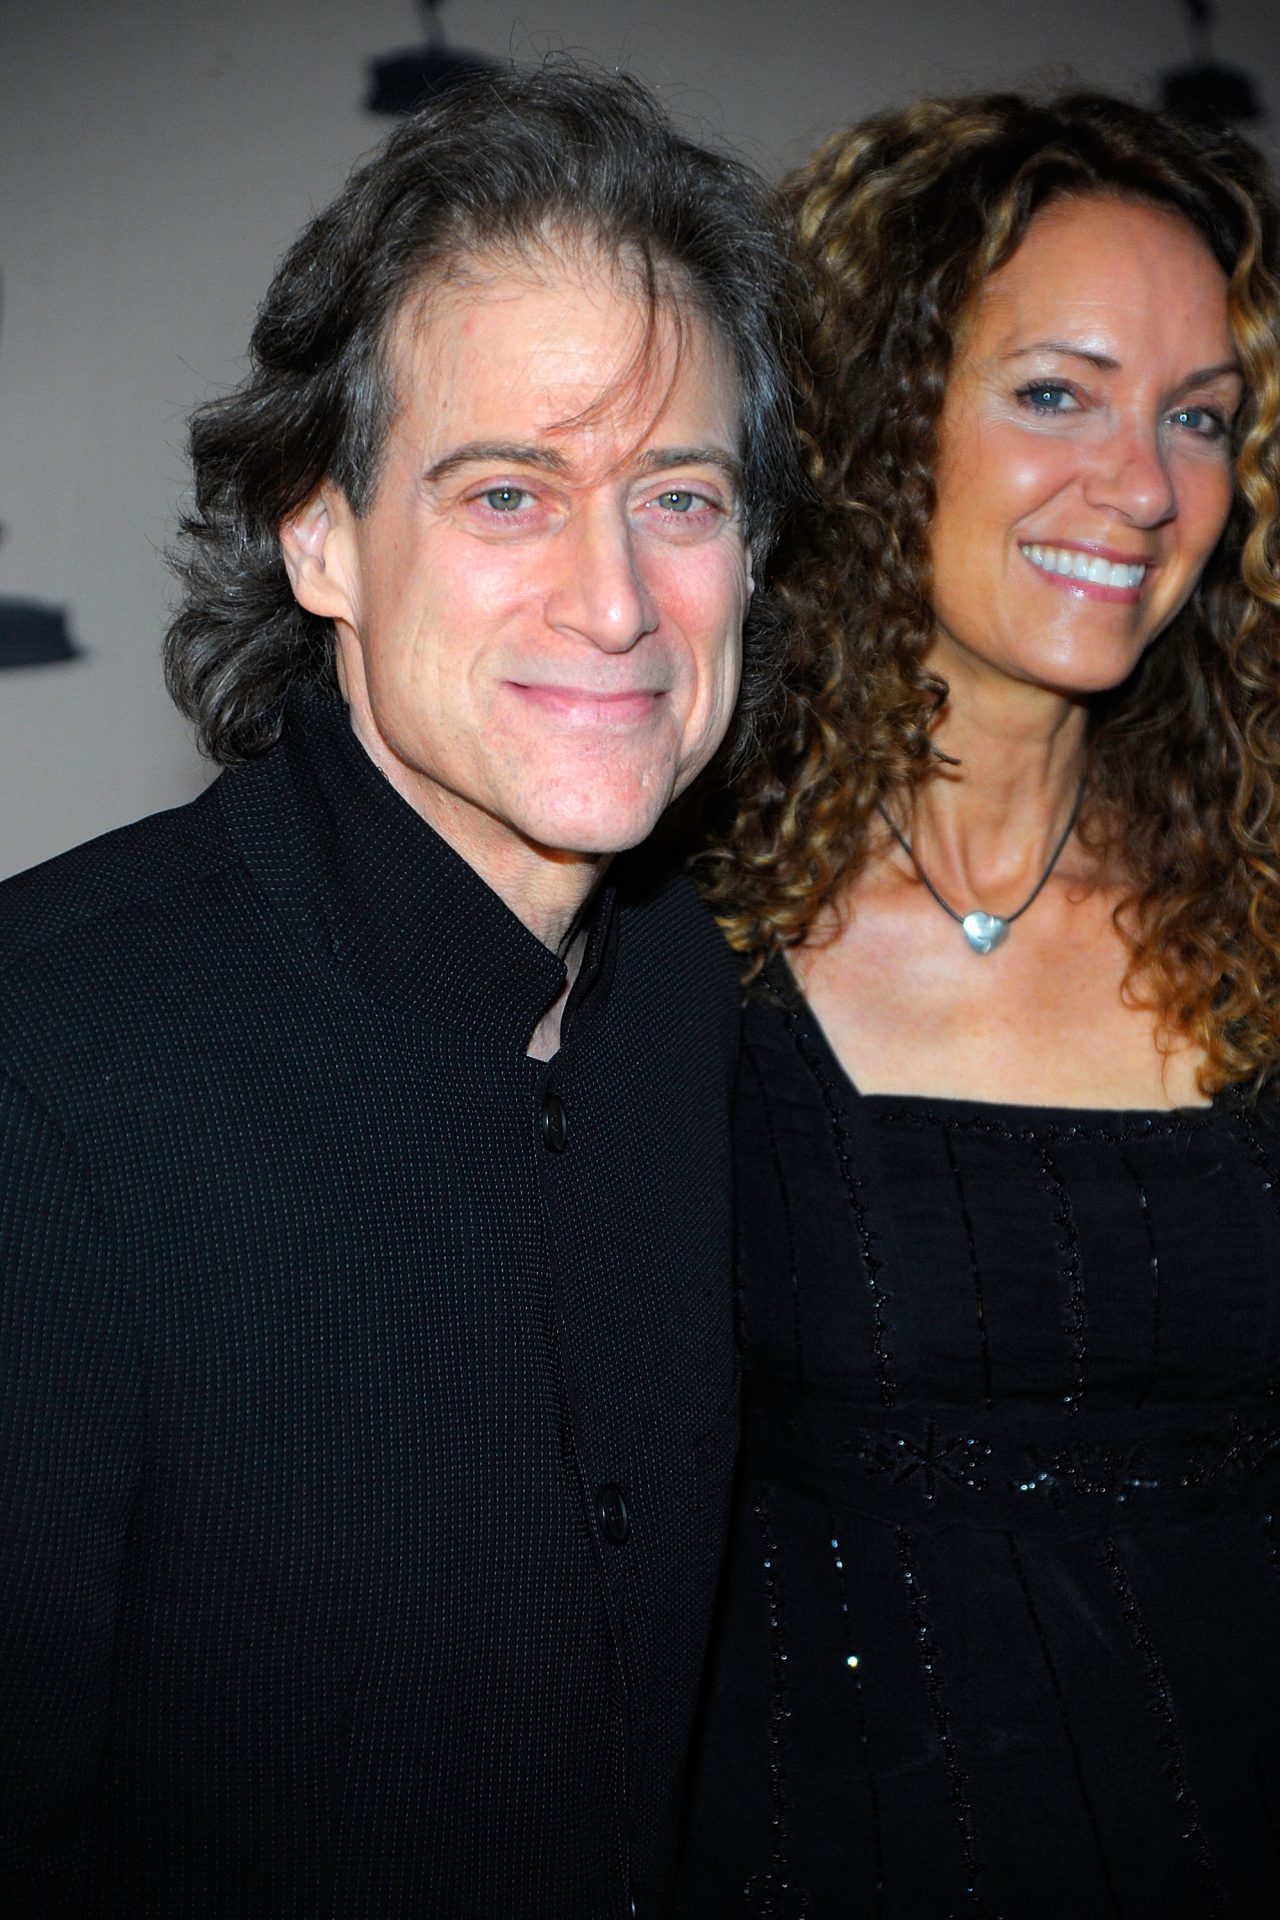 Lewis married Joyce Lapinsky in 2005